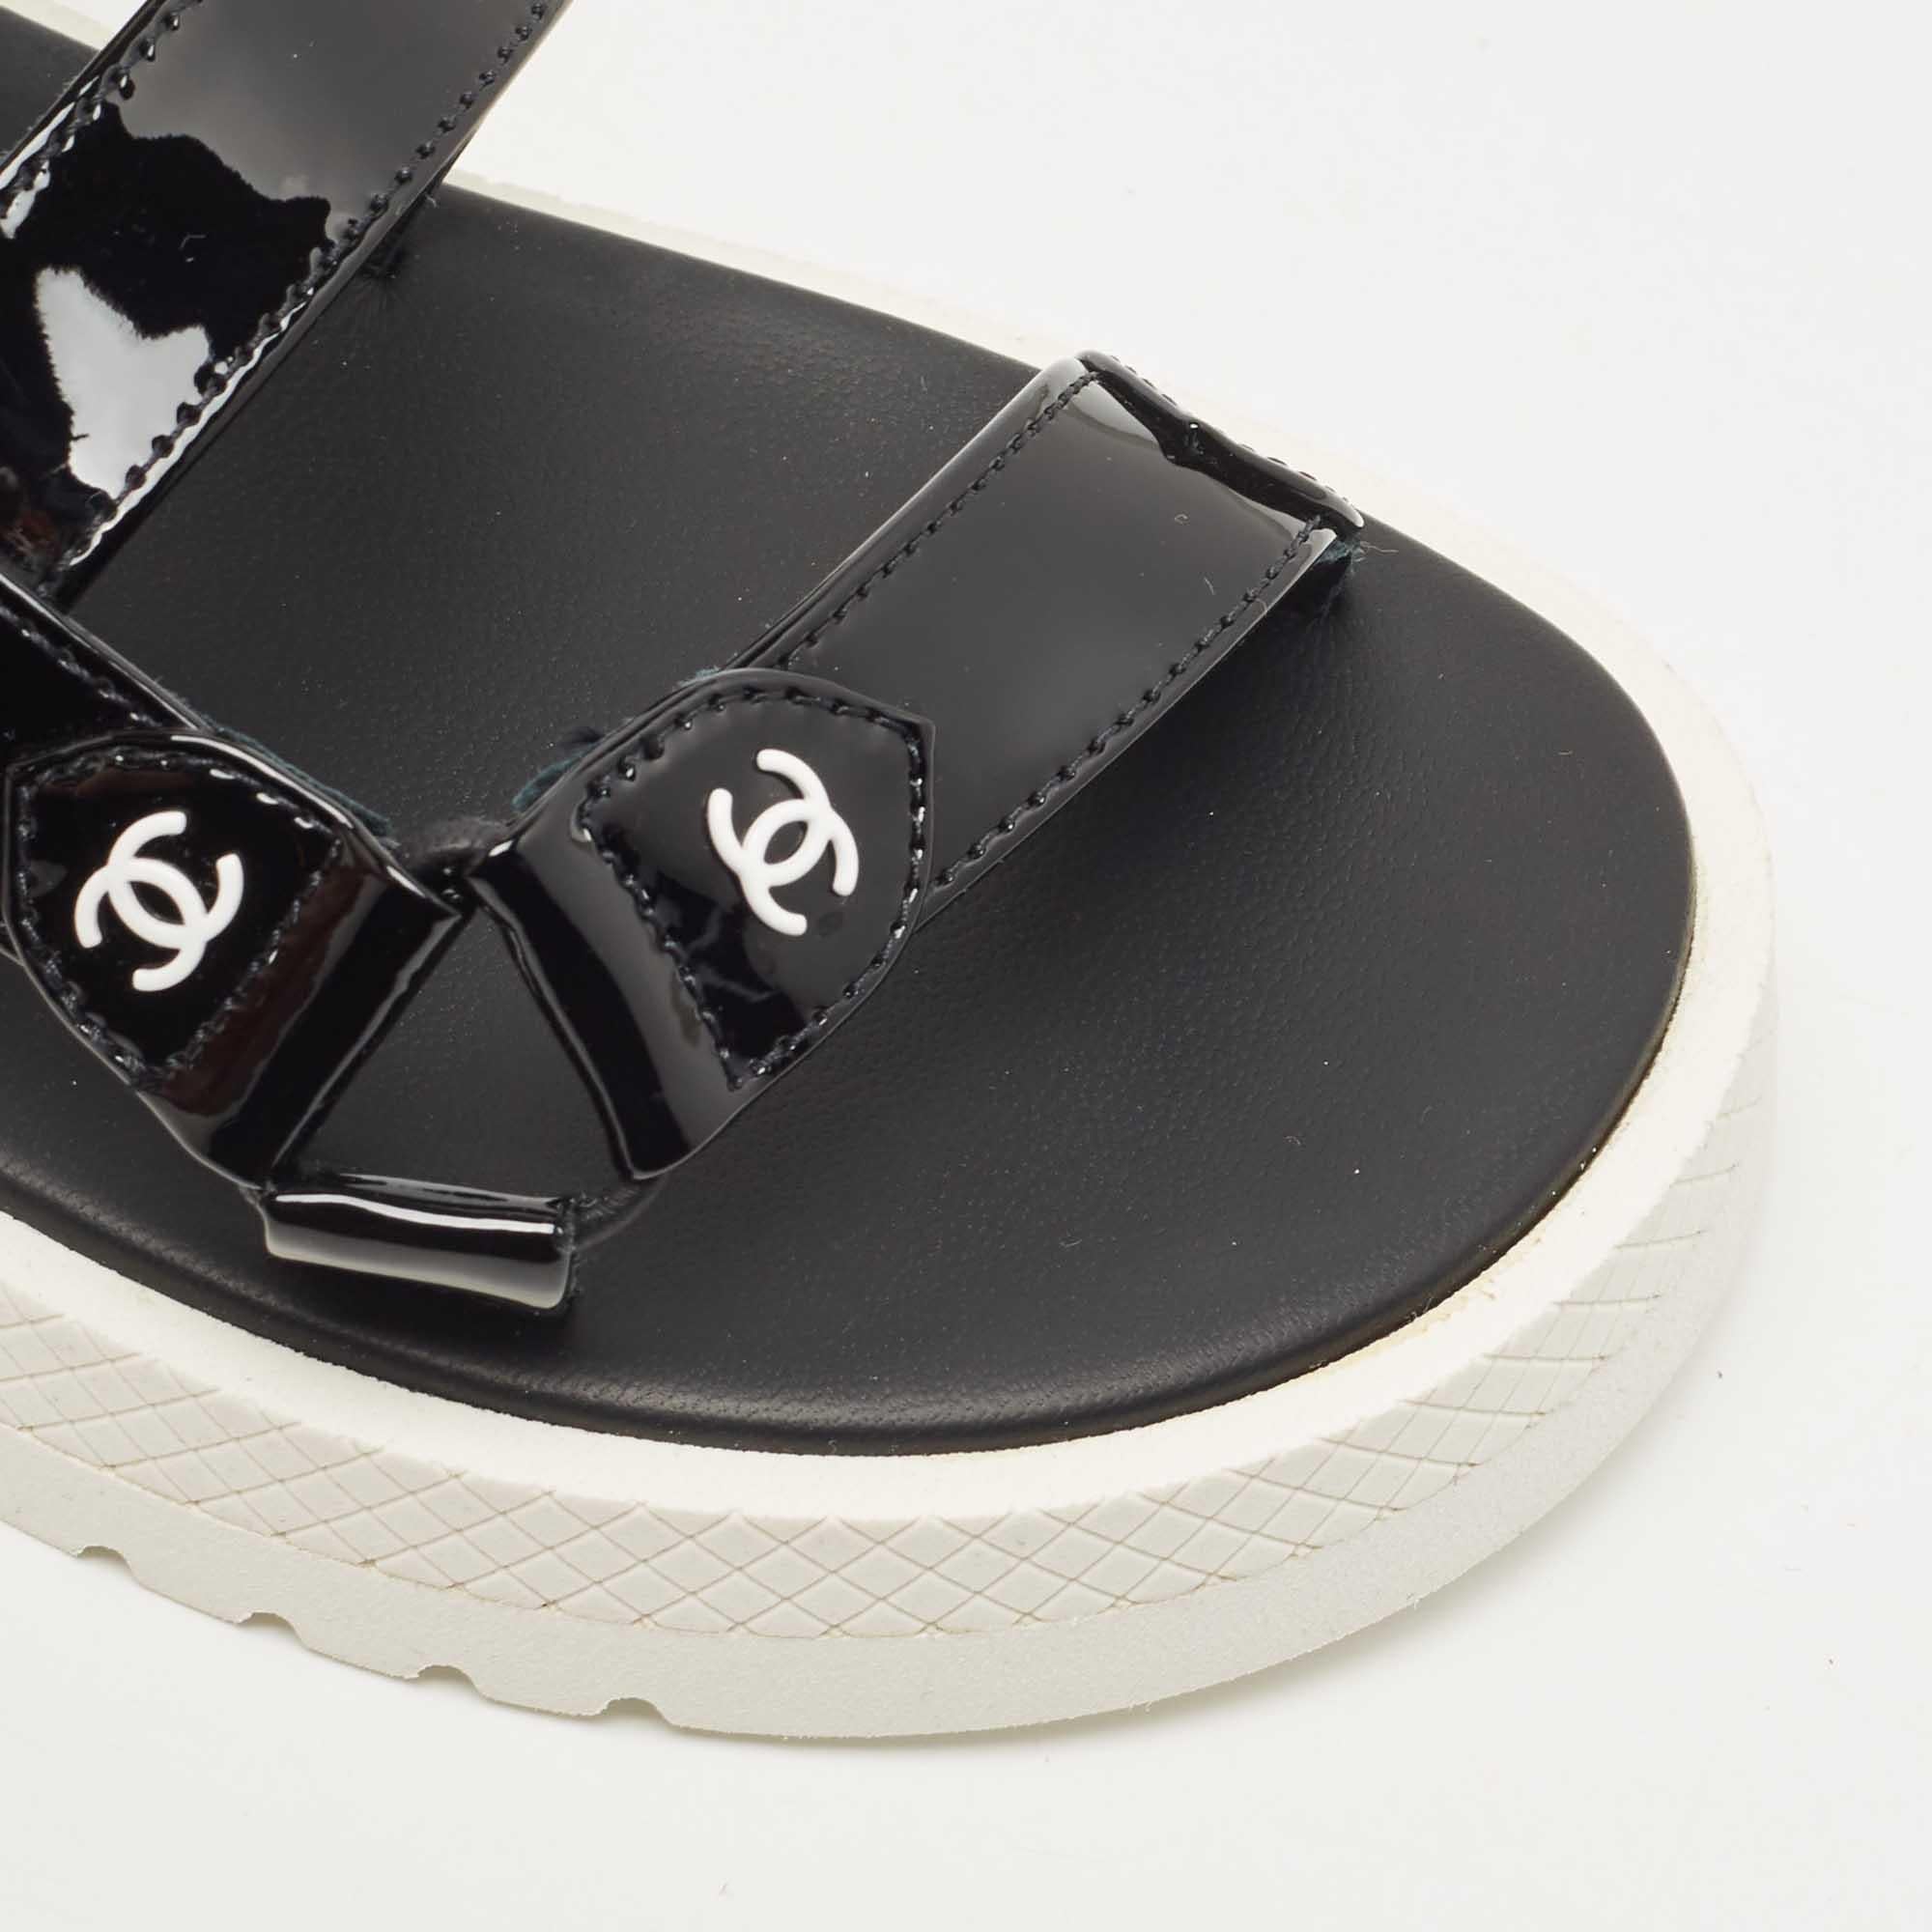 Chanel Black Patent Leather CC Velcro Strap Sandals Size 36 2